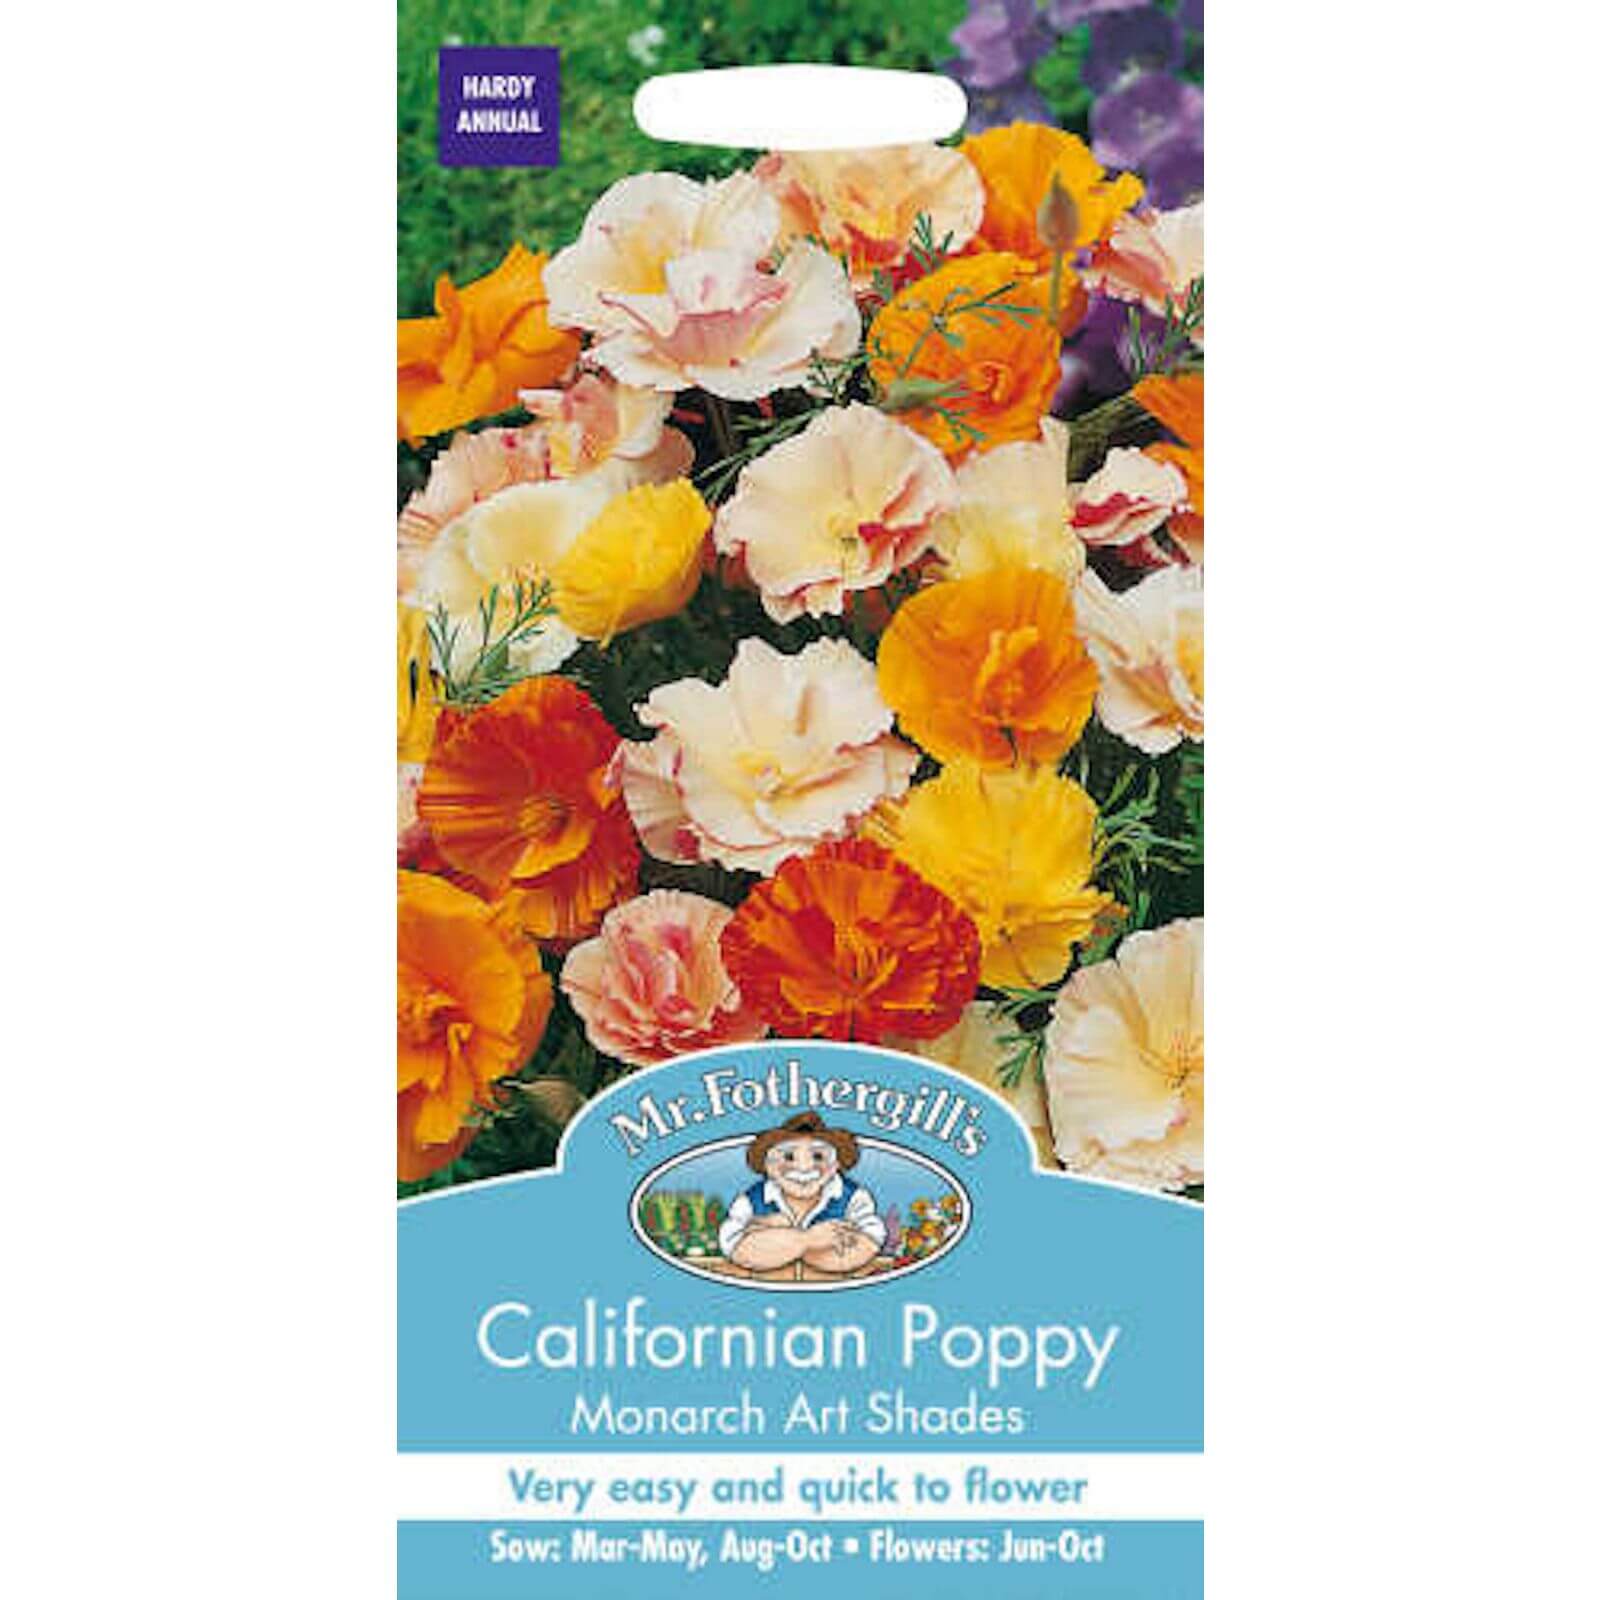 Mr. Fothergill's Californian Poppy Monarch Art Shades (Eschscholzia Californica) Seeds